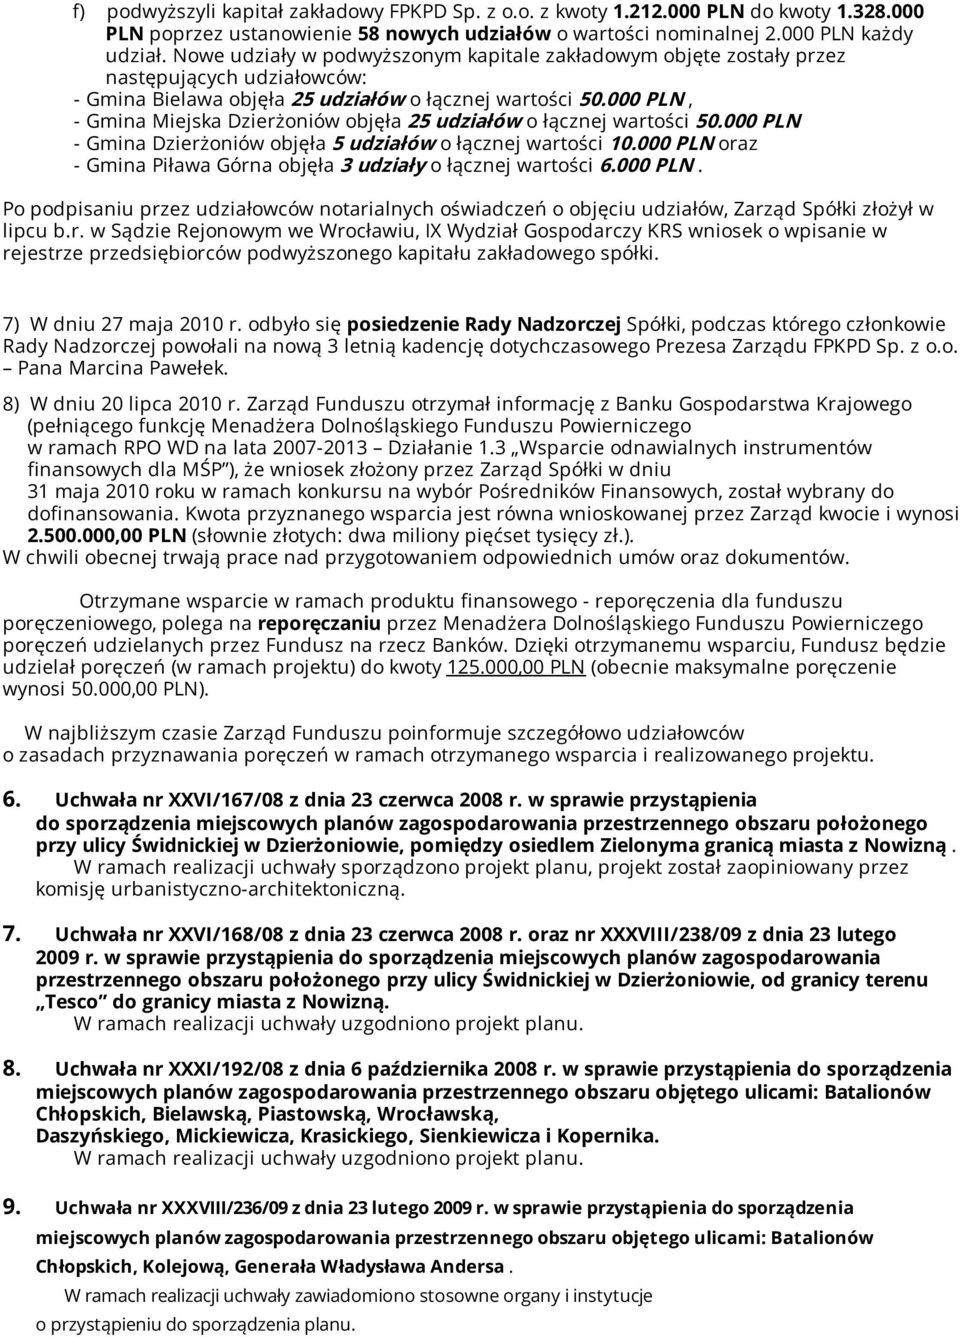 000 PLN, - Gmina Miejska Dzierżoniów objęła 25 udziałów o łącznej wartości 50.000 PLN - Gmina Dzierżoniów objęła 5 udziałów o łącznej wartości 10.